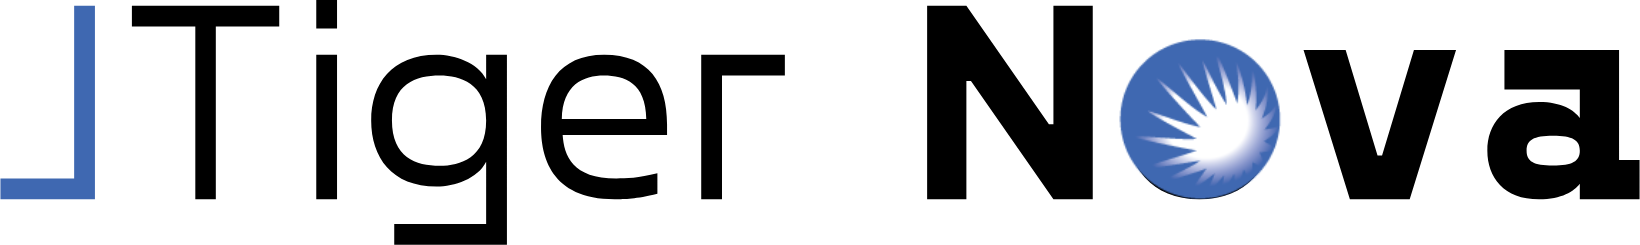 JTiger Nova logo